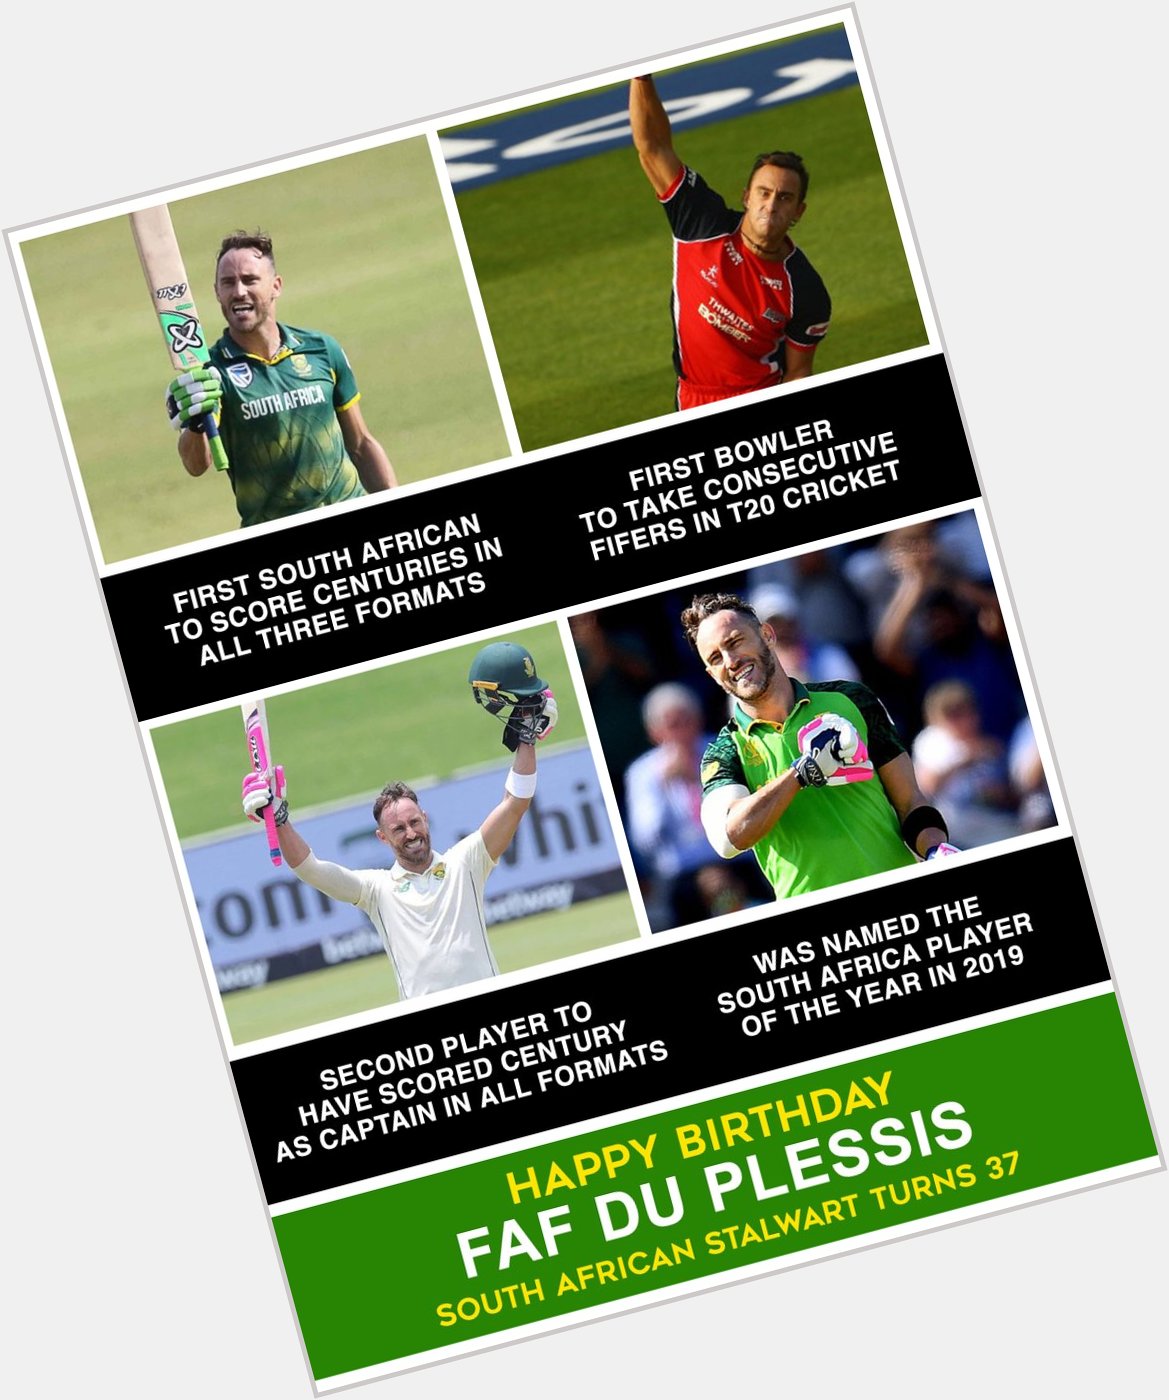 Wishing a very happy birthday to Faf du Plessis!!   